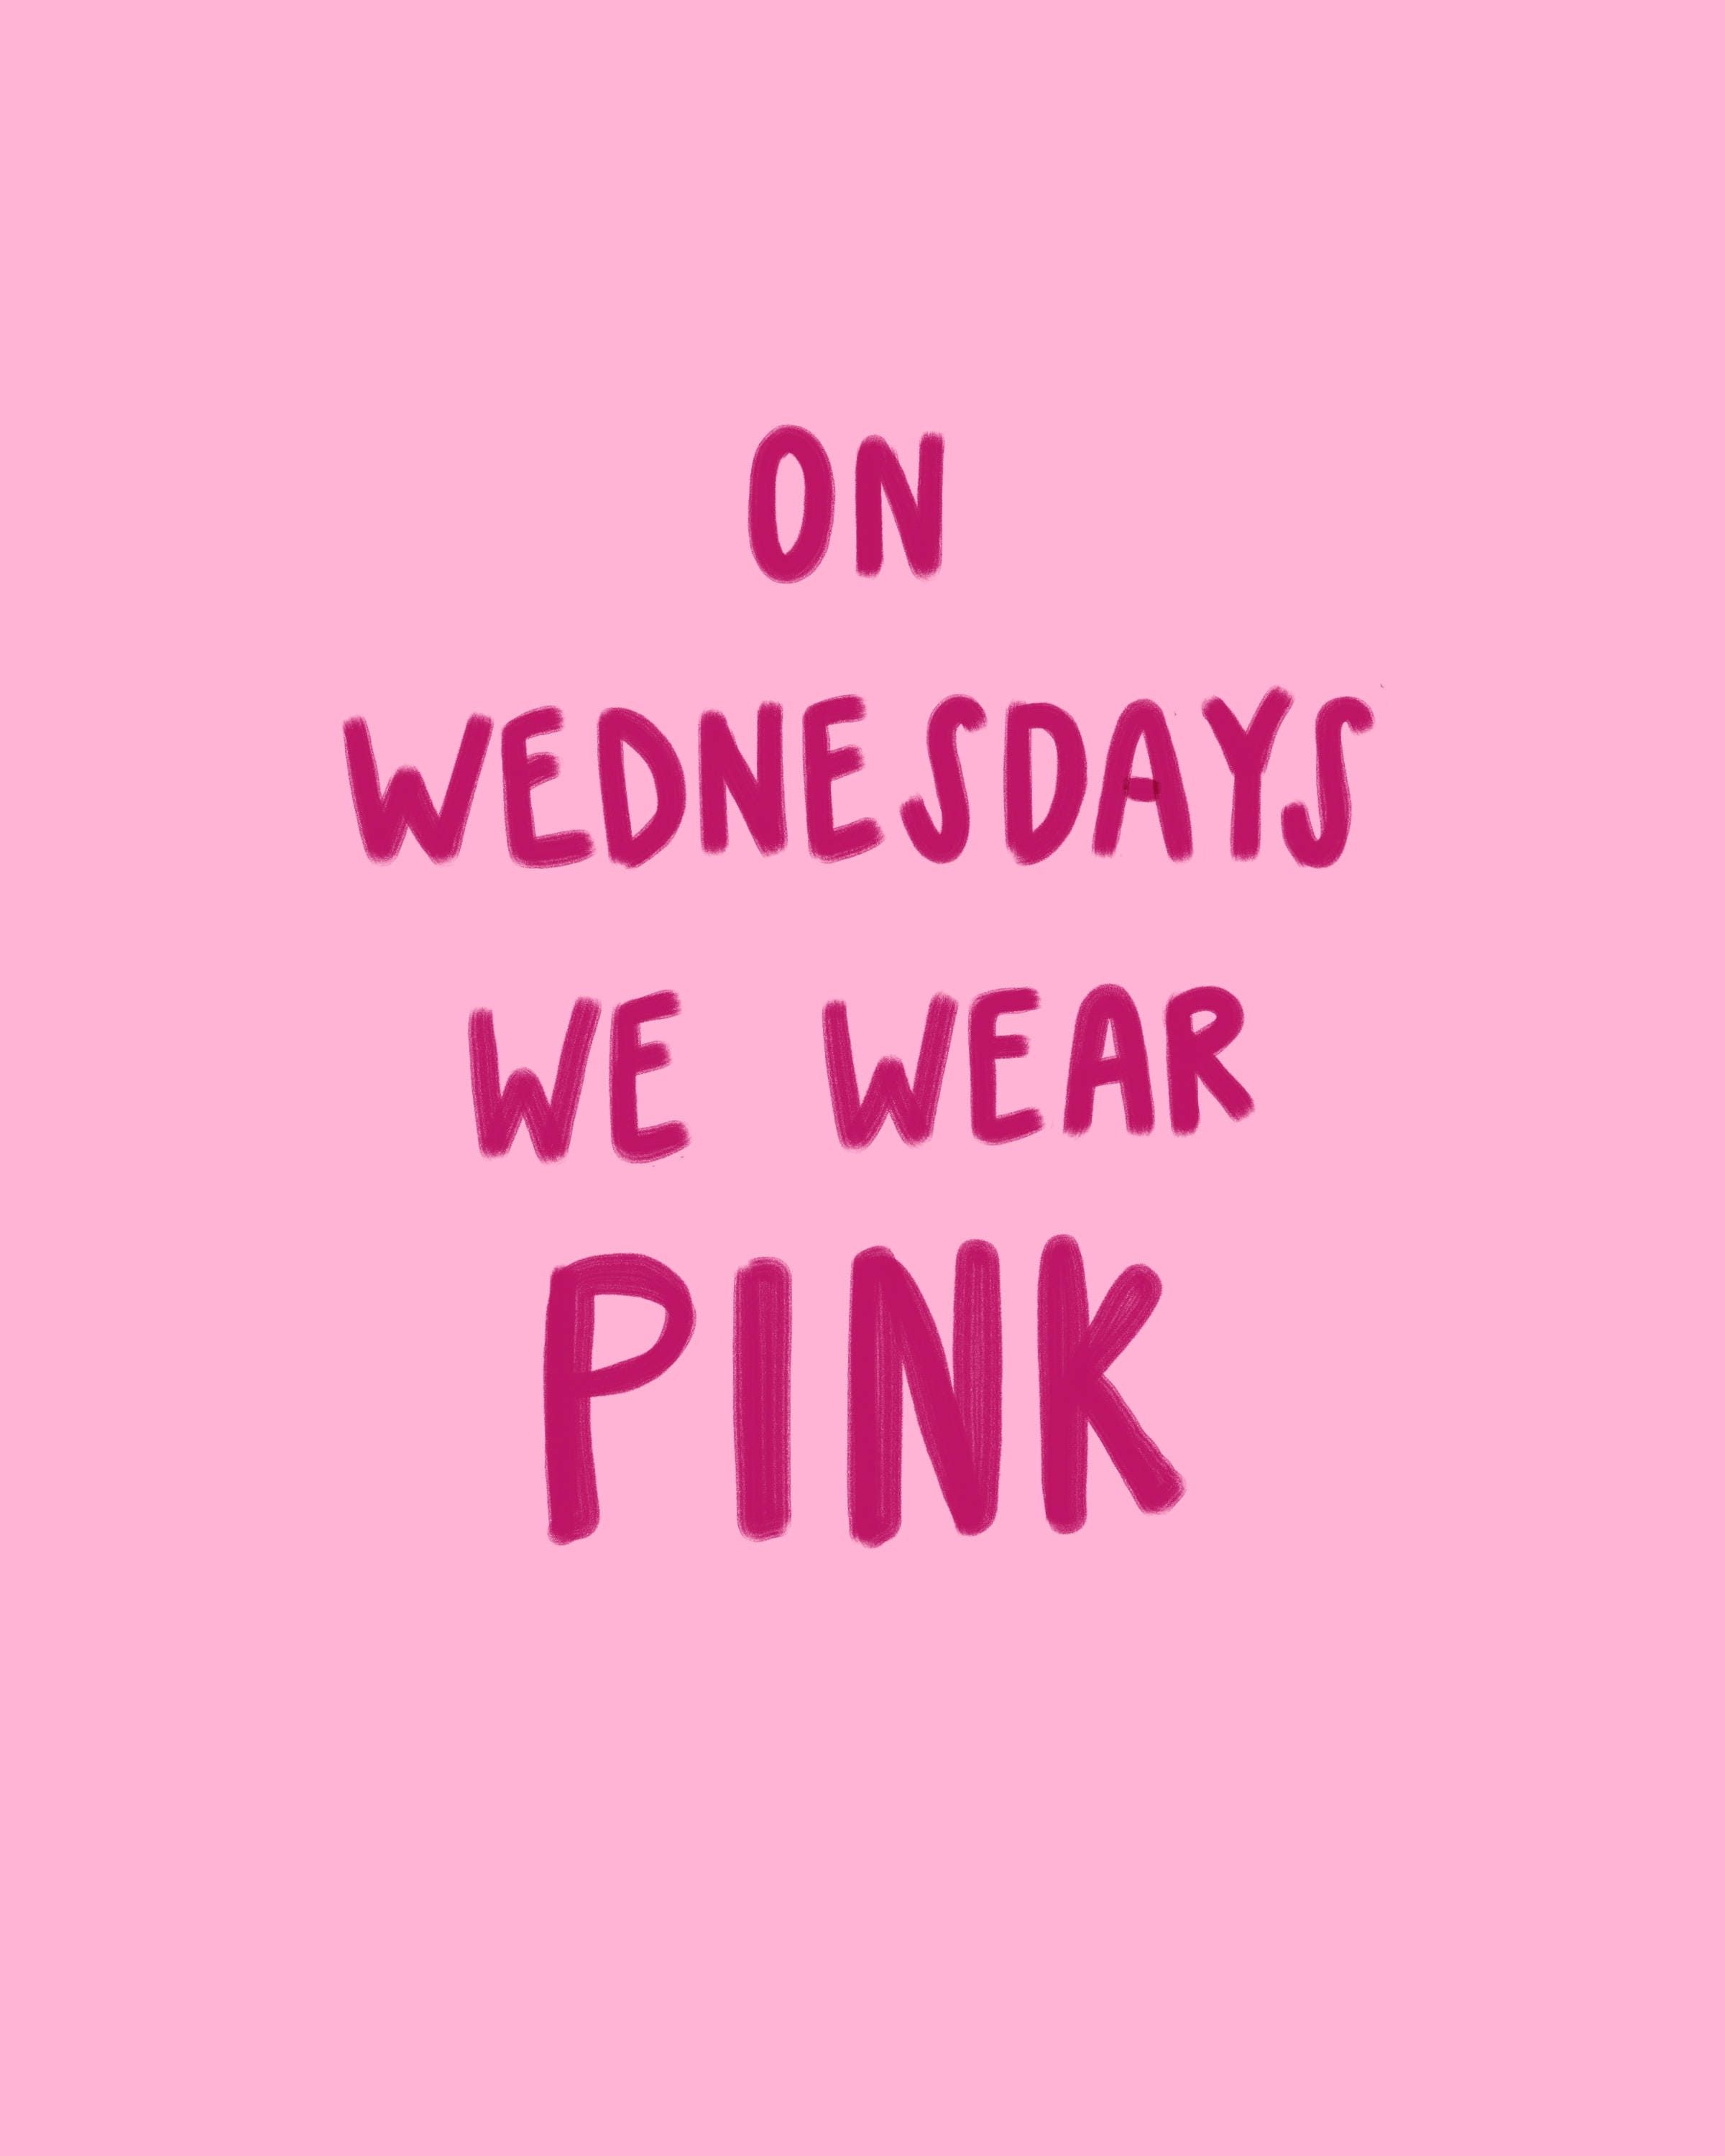 On Wednesdays we wear pink art print | Etsy